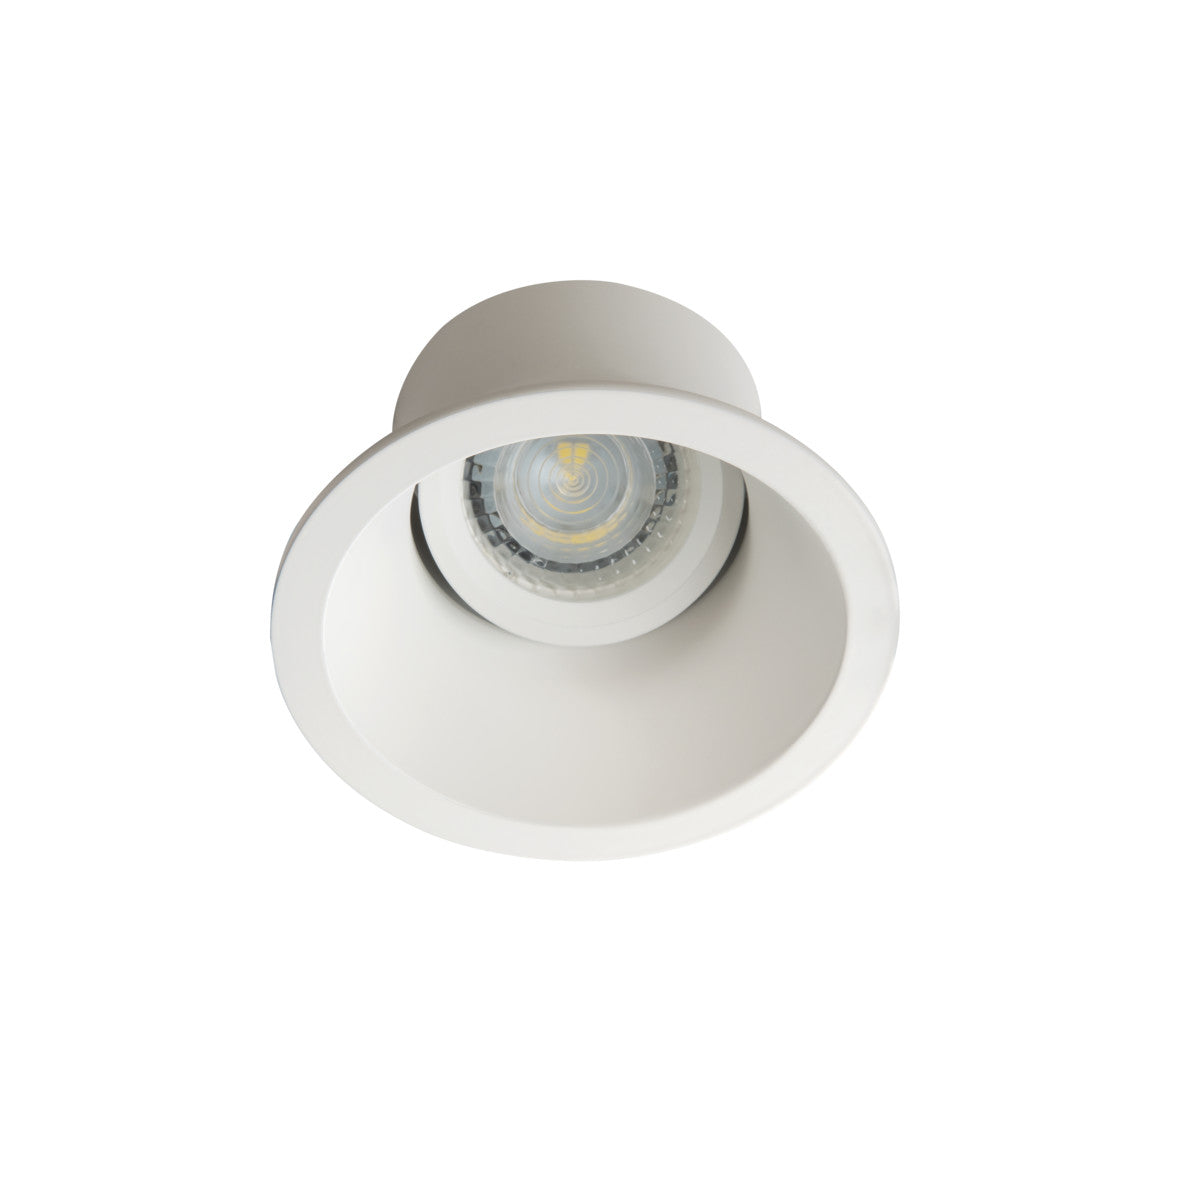 Kanlux APRILA Round Square Ceiling Recessed Decorative GU10 Spot Light Fitting Adjustable